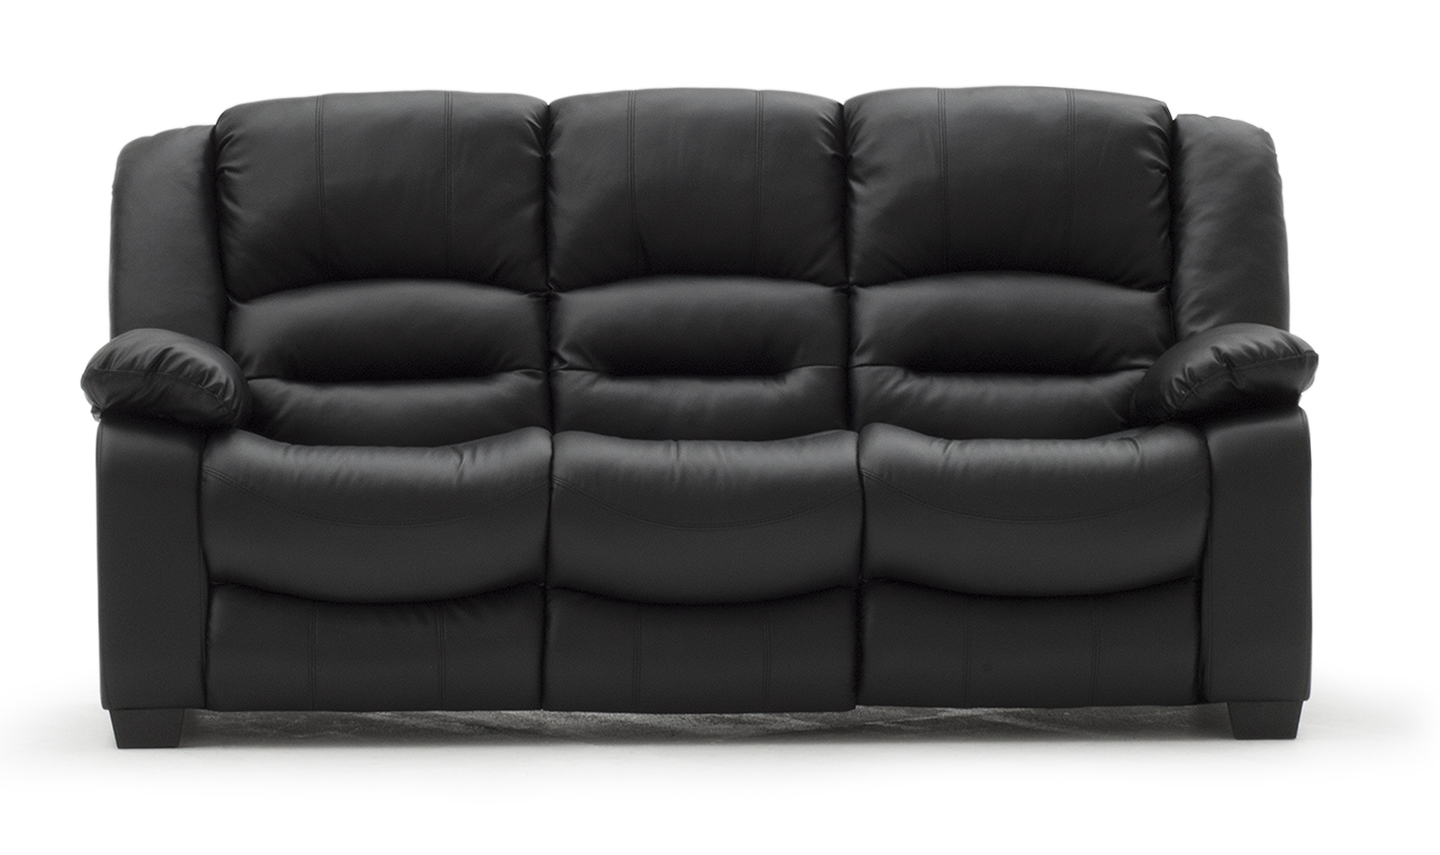 Barletto Black 3 Seater Leather Sofa